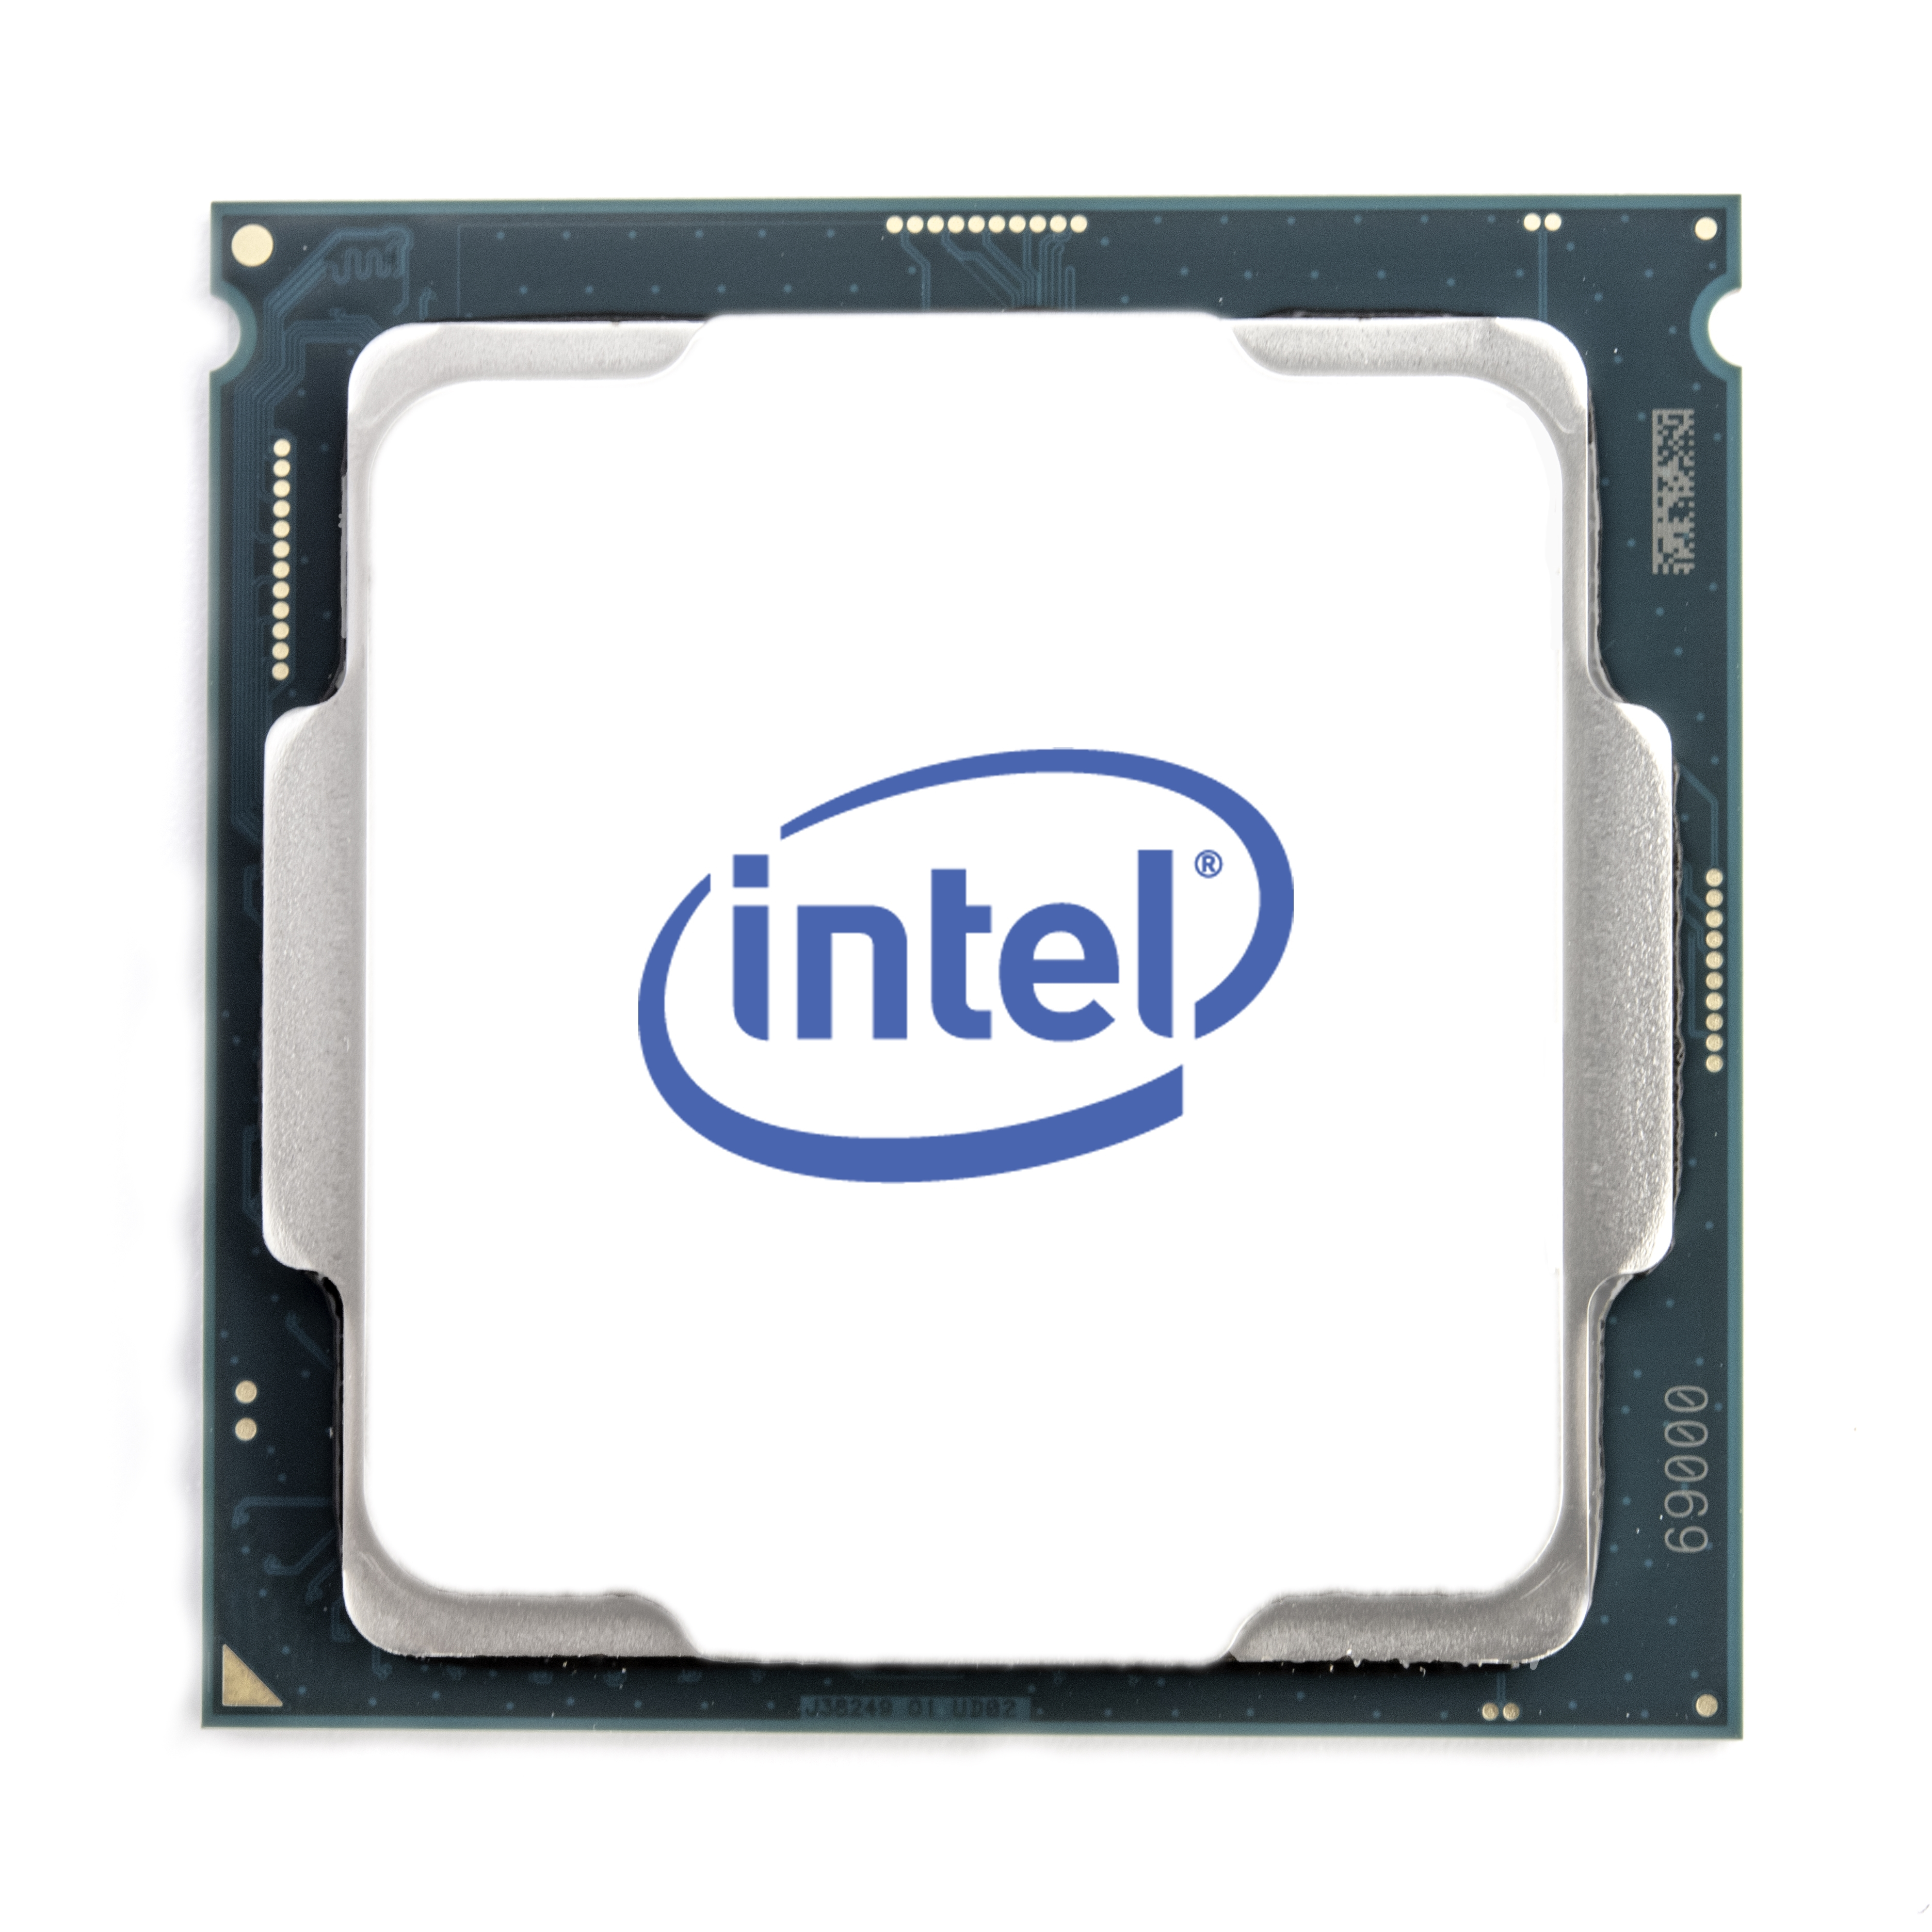 Intel Xeon 5220R